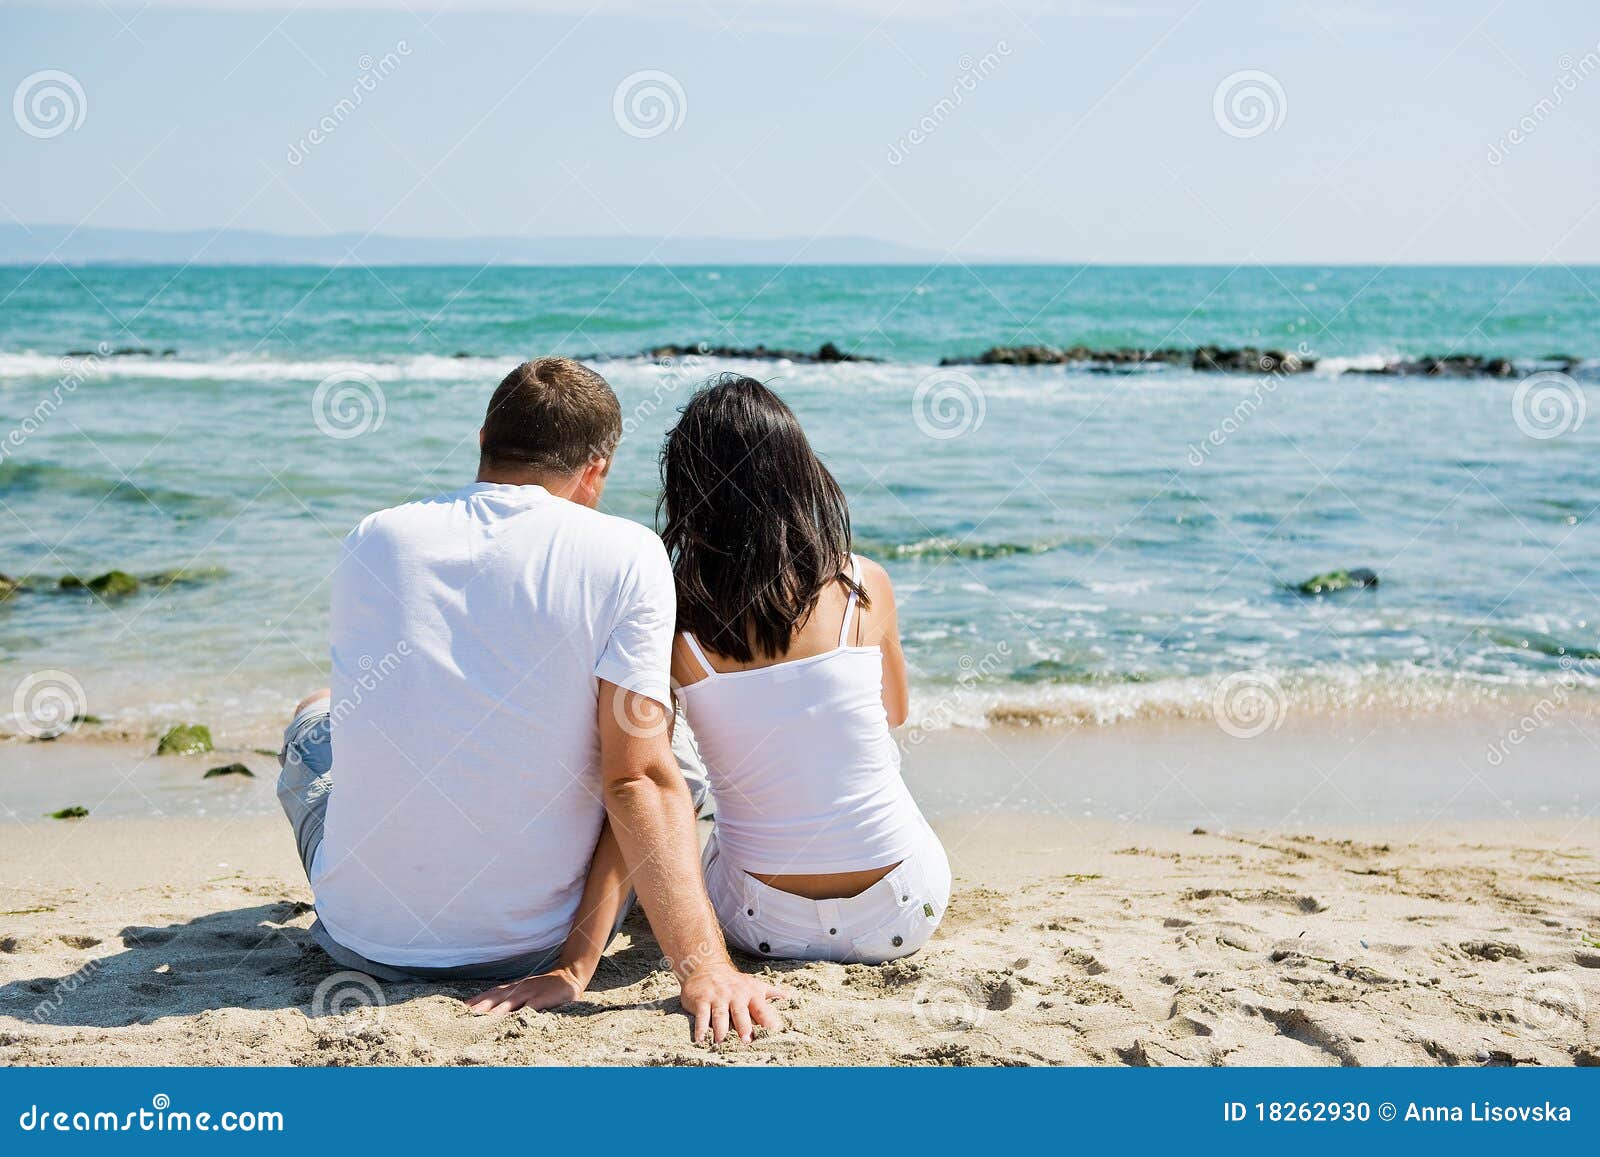 Couple on beach stock photo. Image of romance, female - 18262930